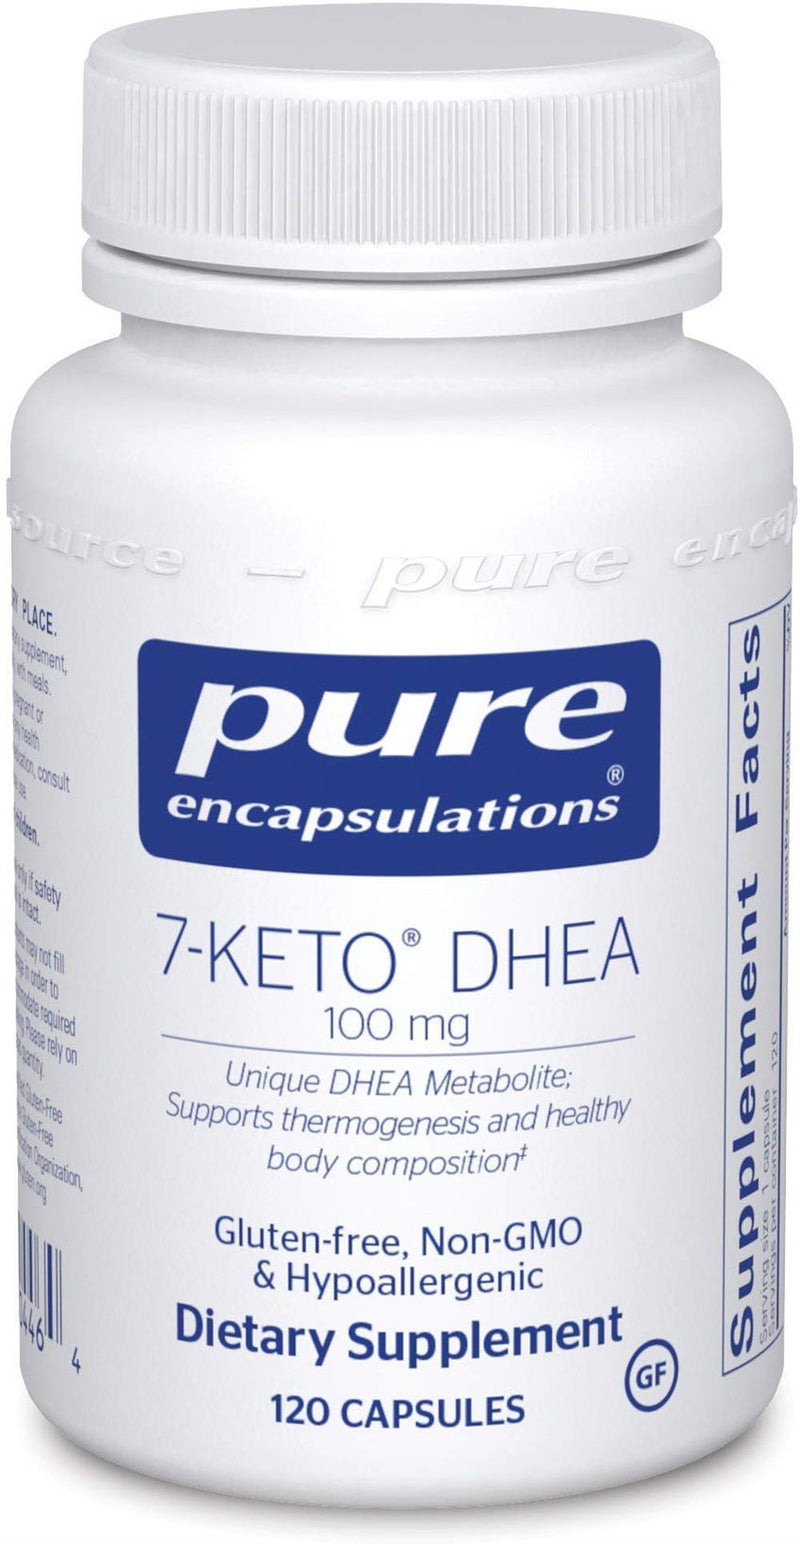 Pure Encapsulations 7-KETO DHEA 100 mg -- 60 Capsules 120 capsules